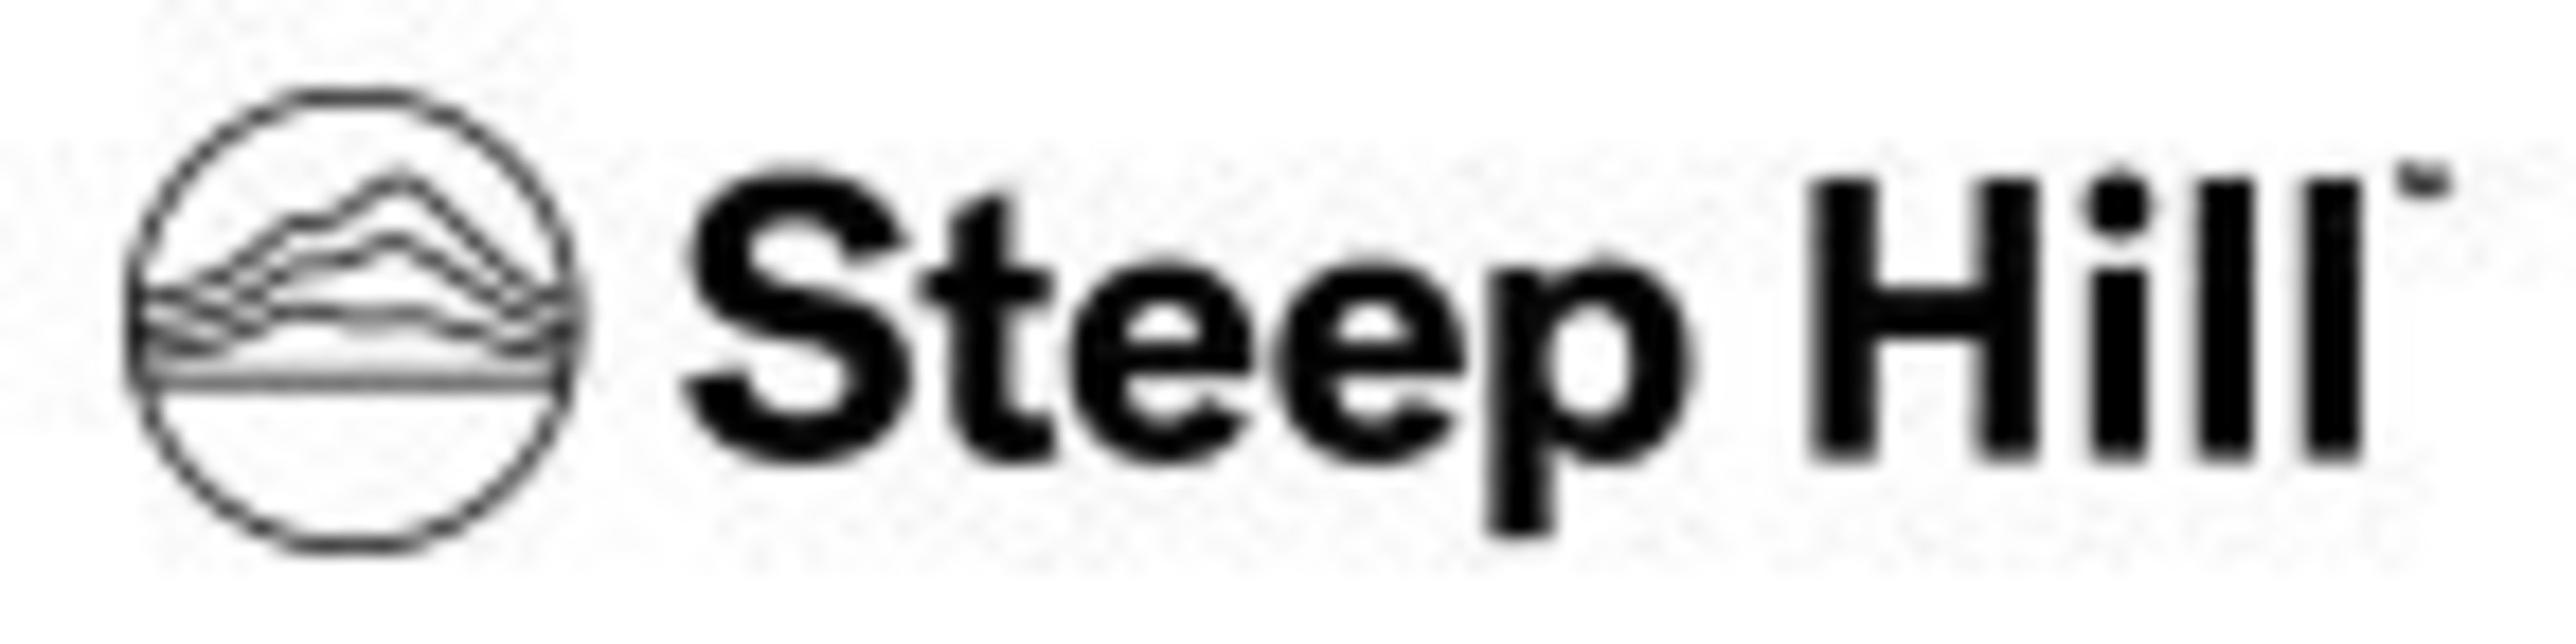 Steep Hill logo